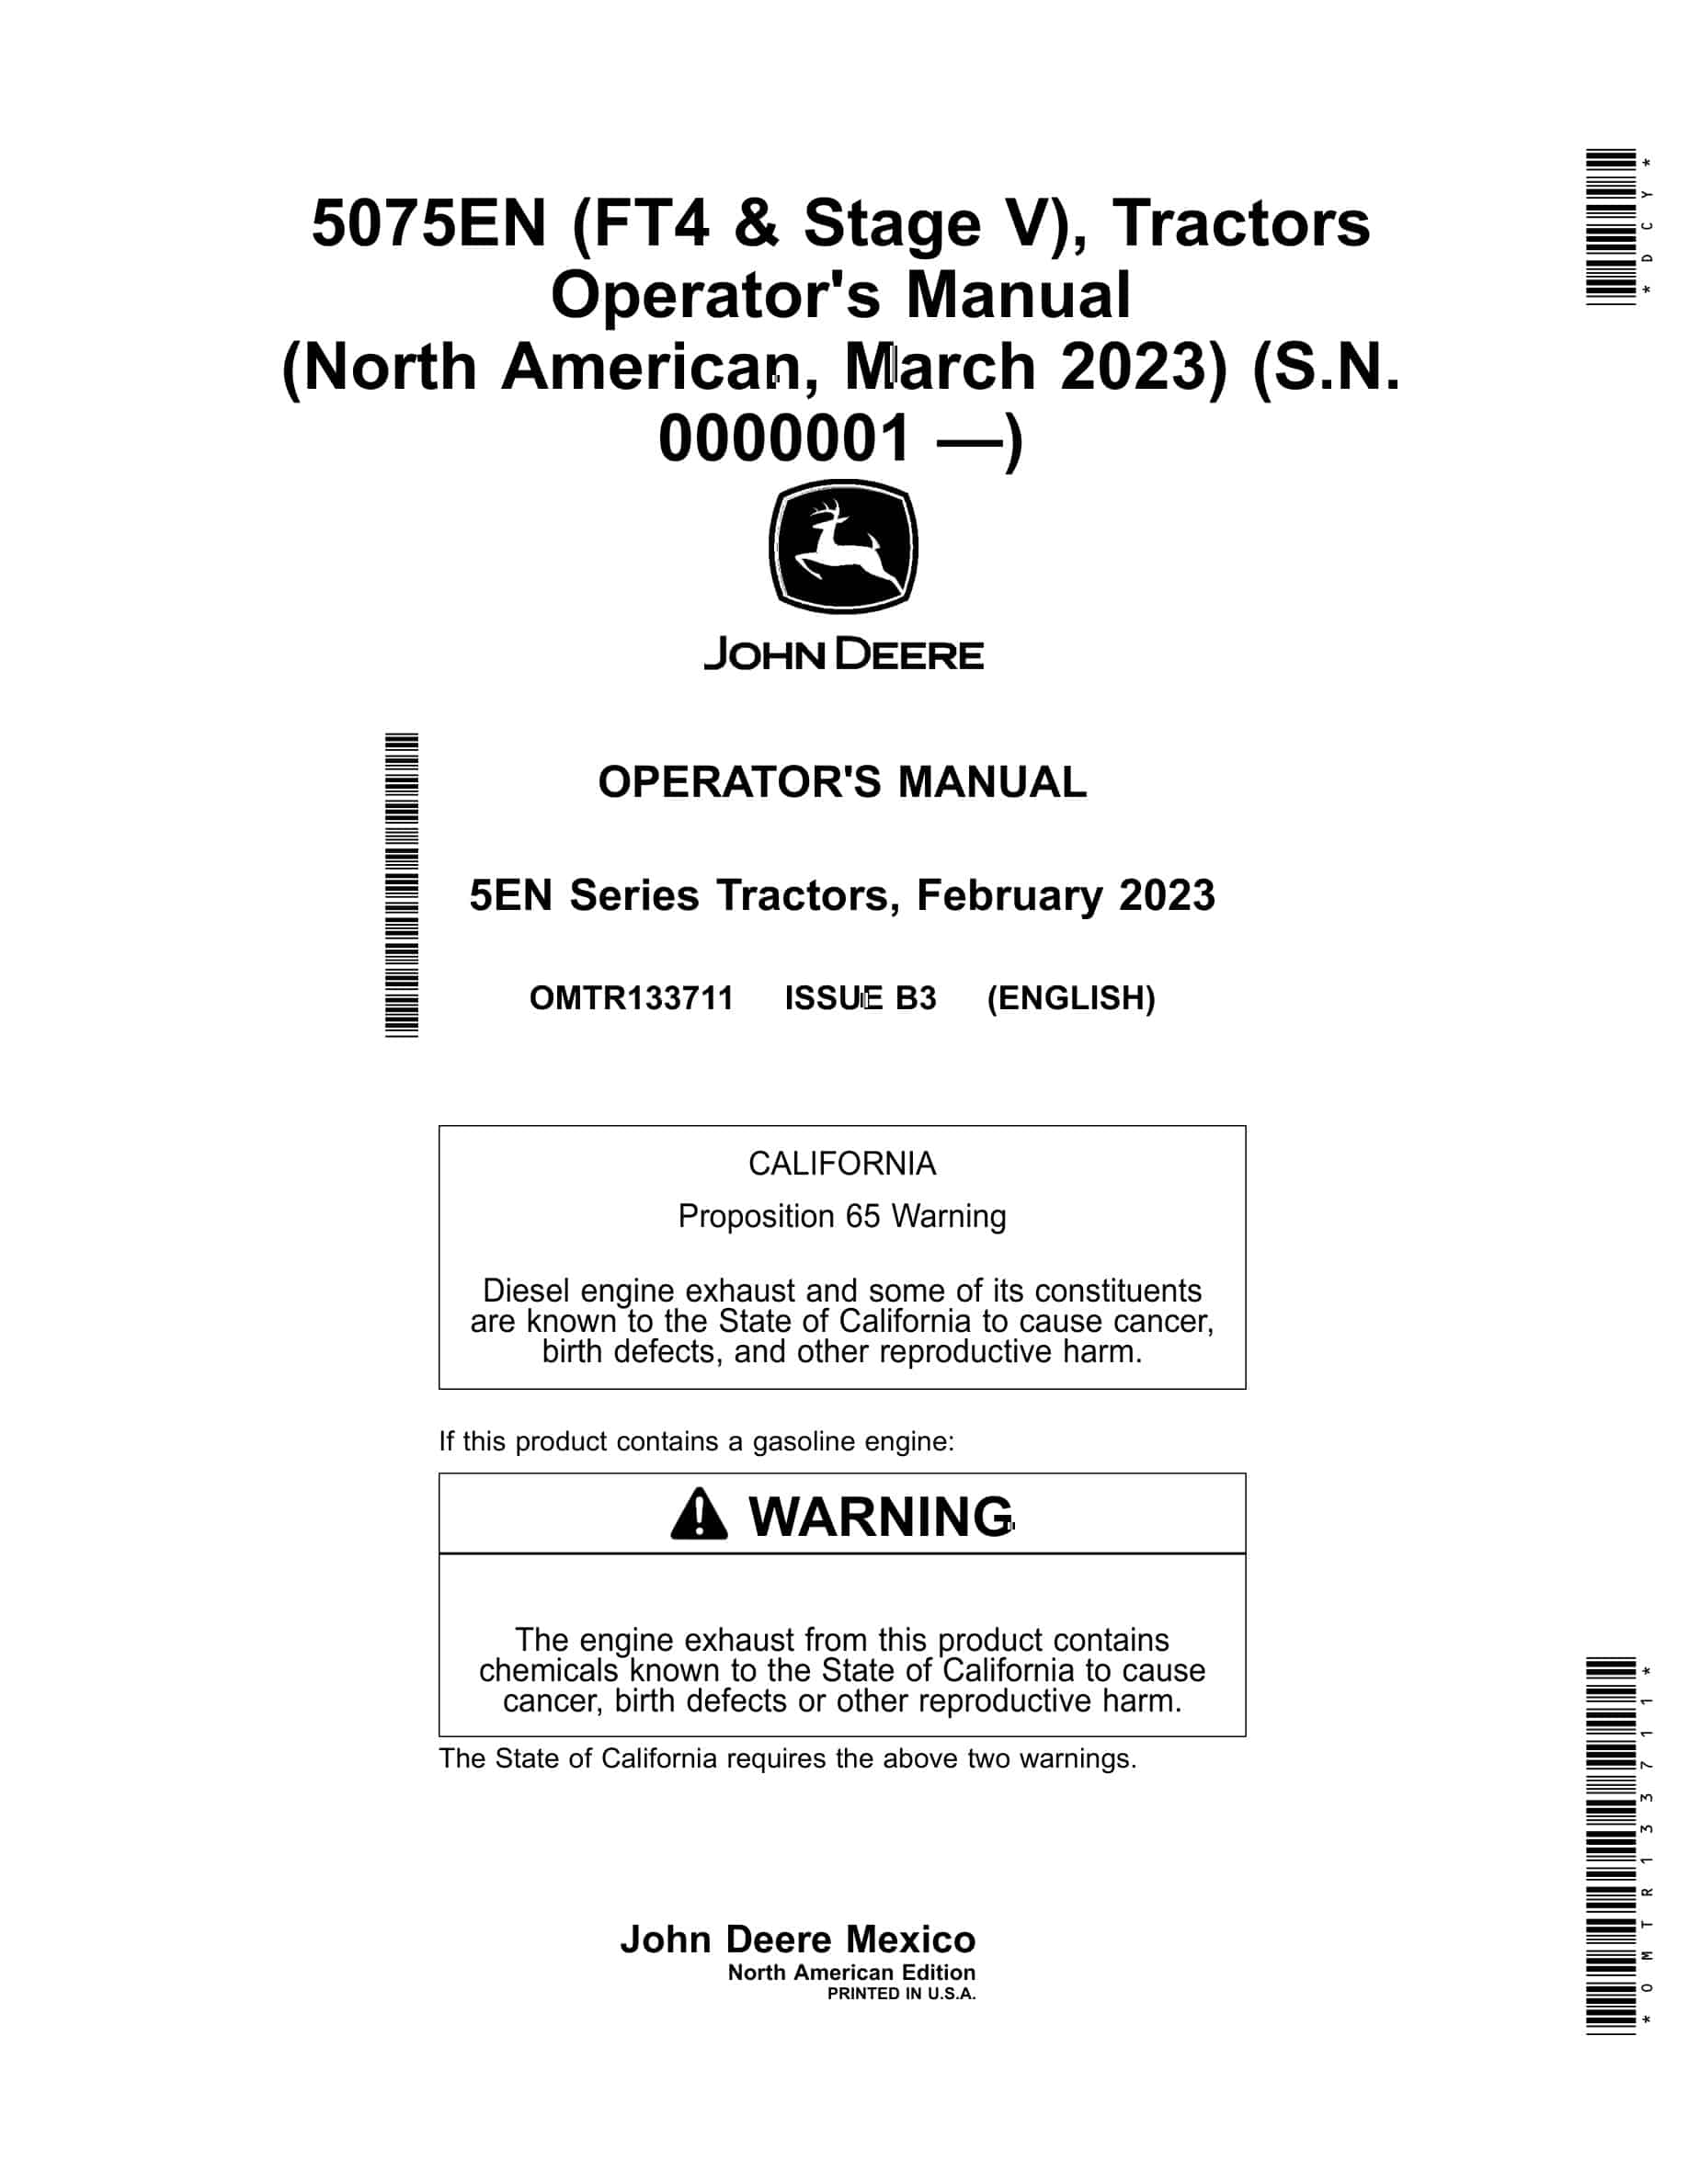 John Deere 5075en (ft4 & Stage V) Tractors Operator Manuals OMTR133711-1